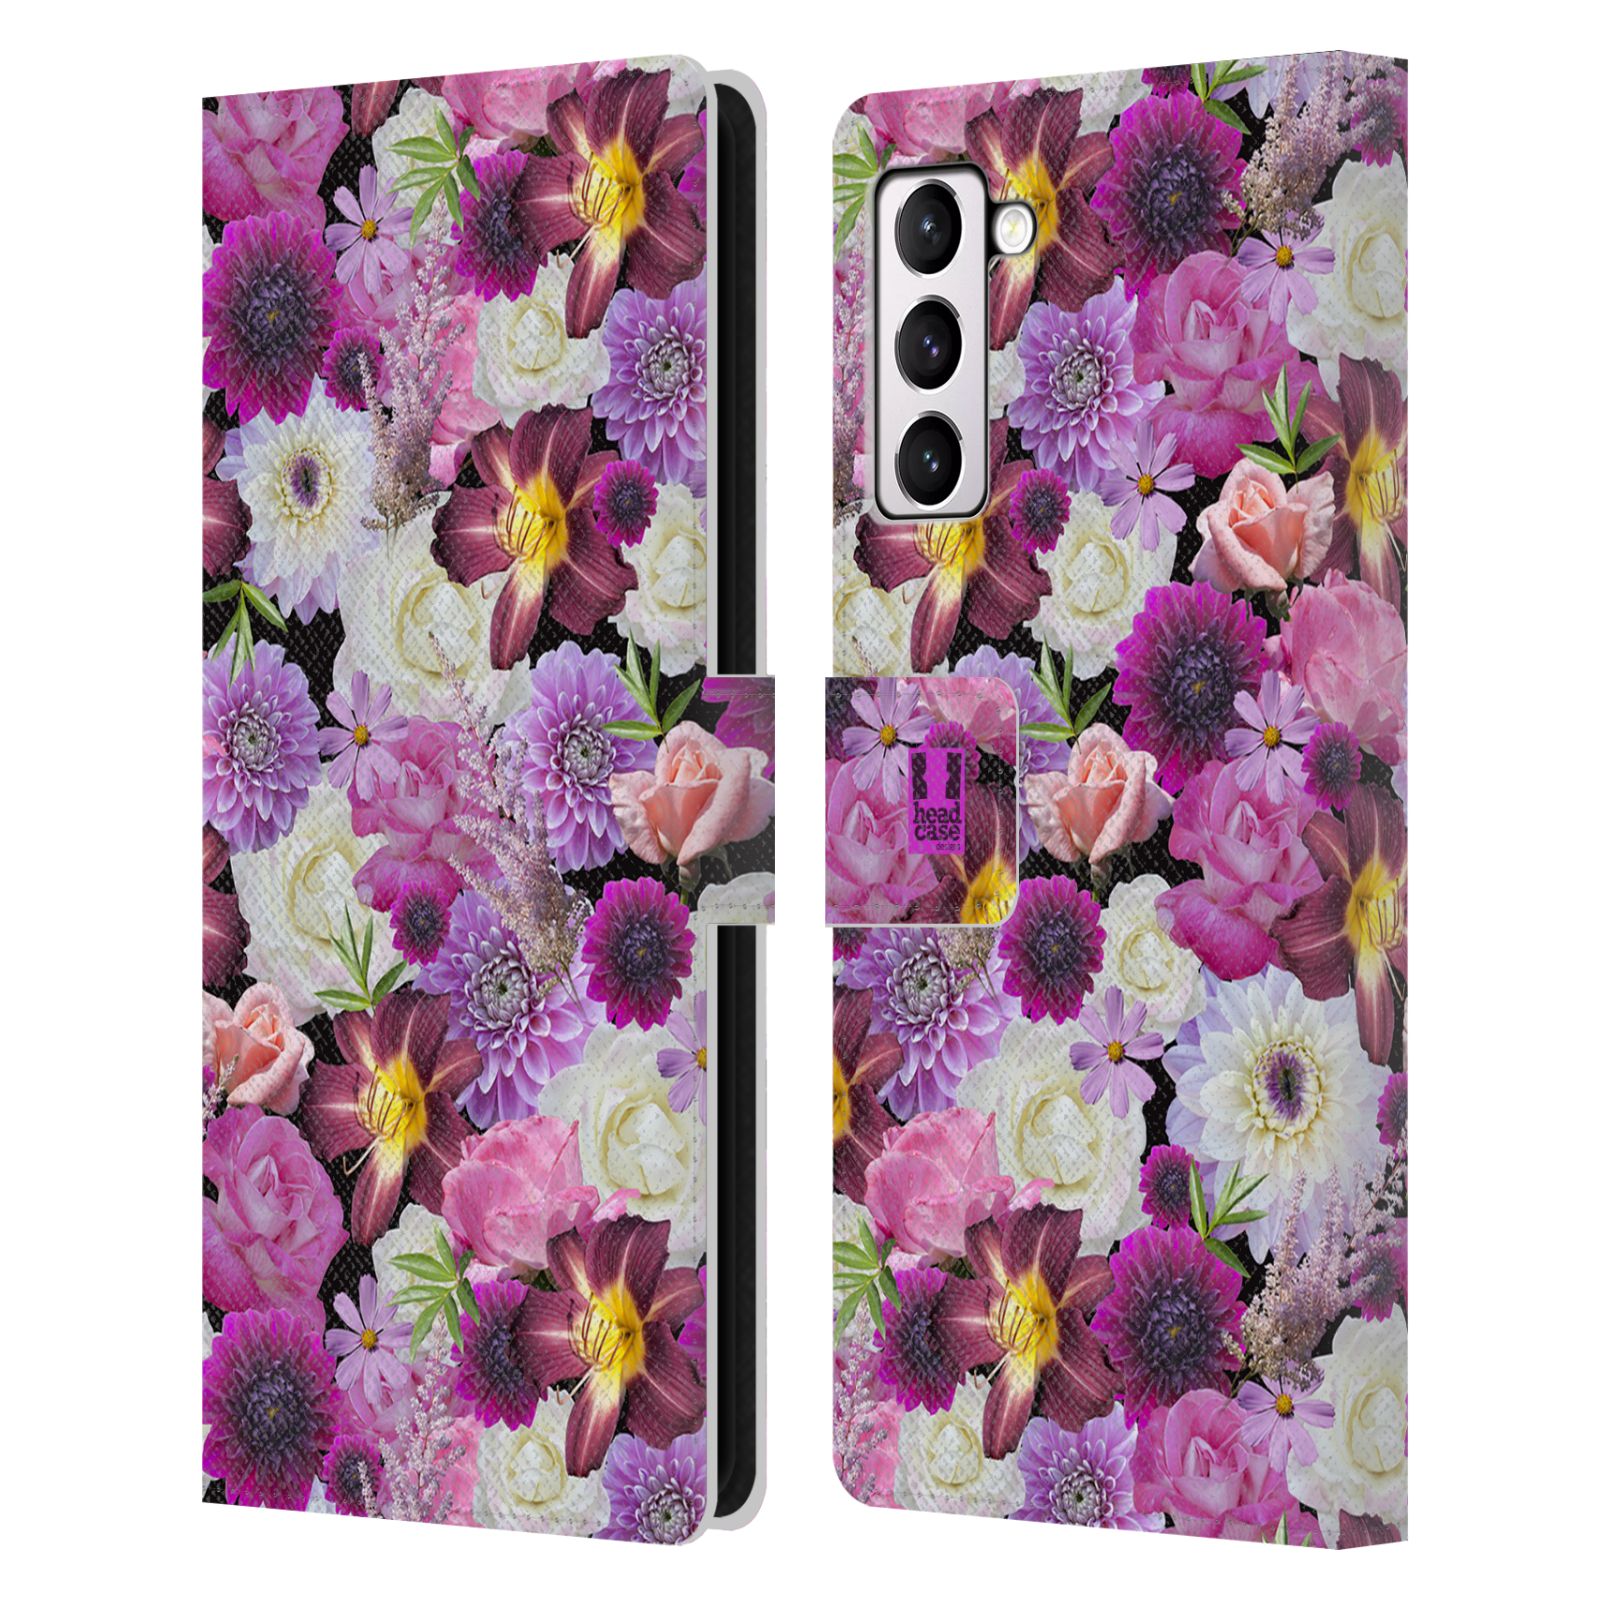 Pouzdro HEAD CASE na mobil Samsung Galaxy S21+ 5G / S21 PLUS 5G květy foto fialová a bílá